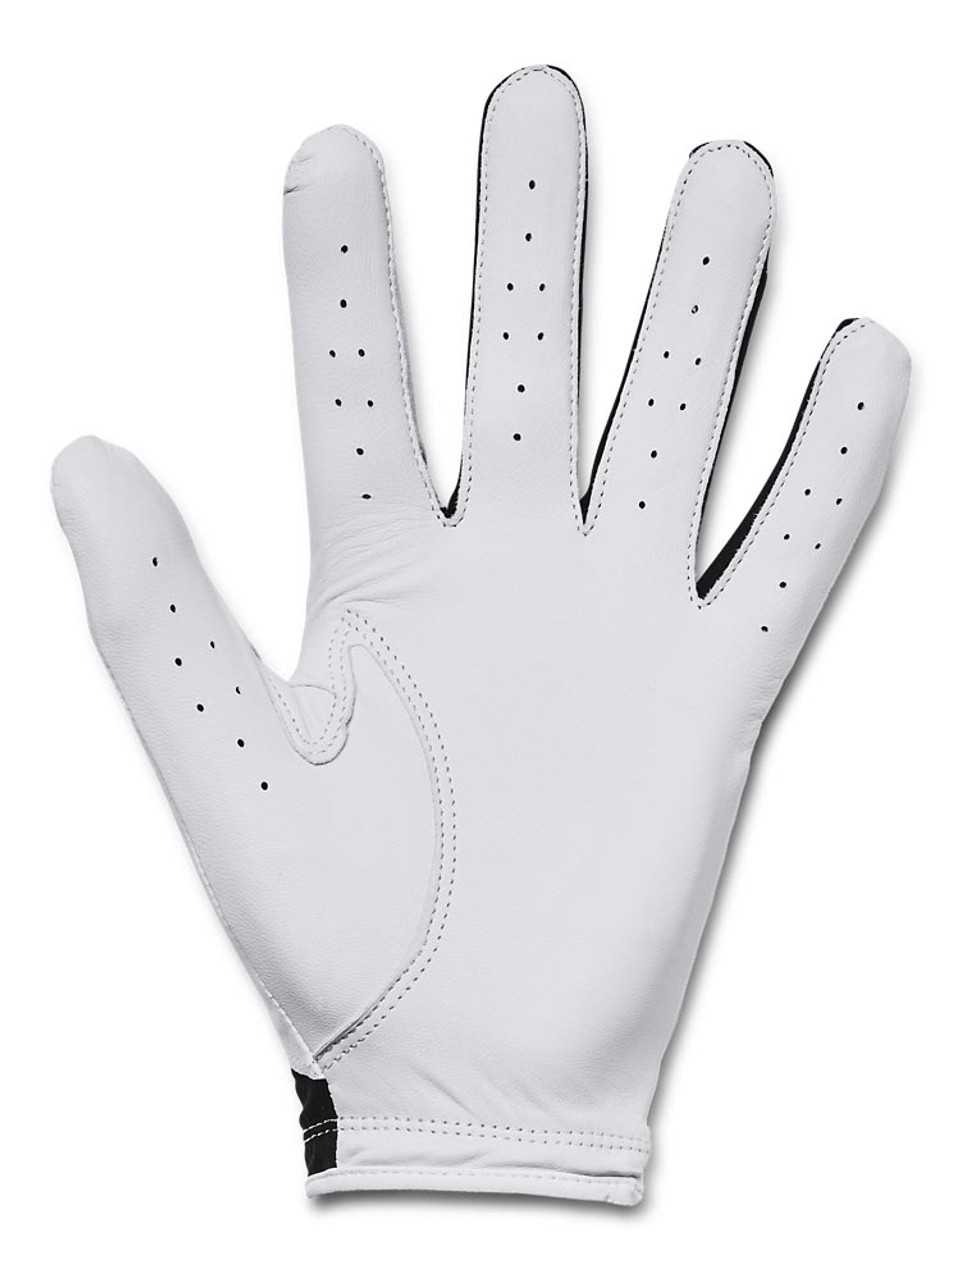 Under Armour Iso-Chill Golf Glove - White/Black - |